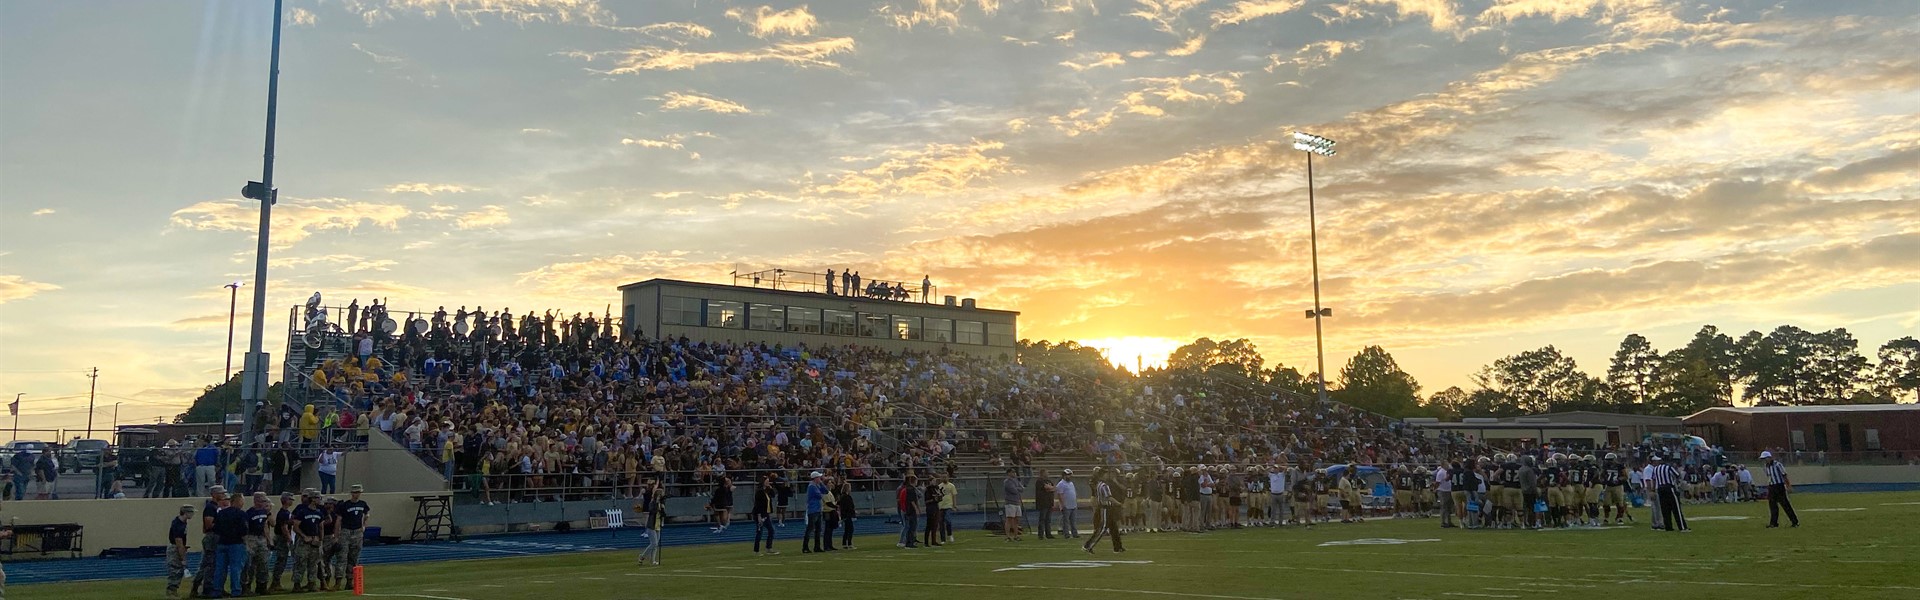 Stadium sunset